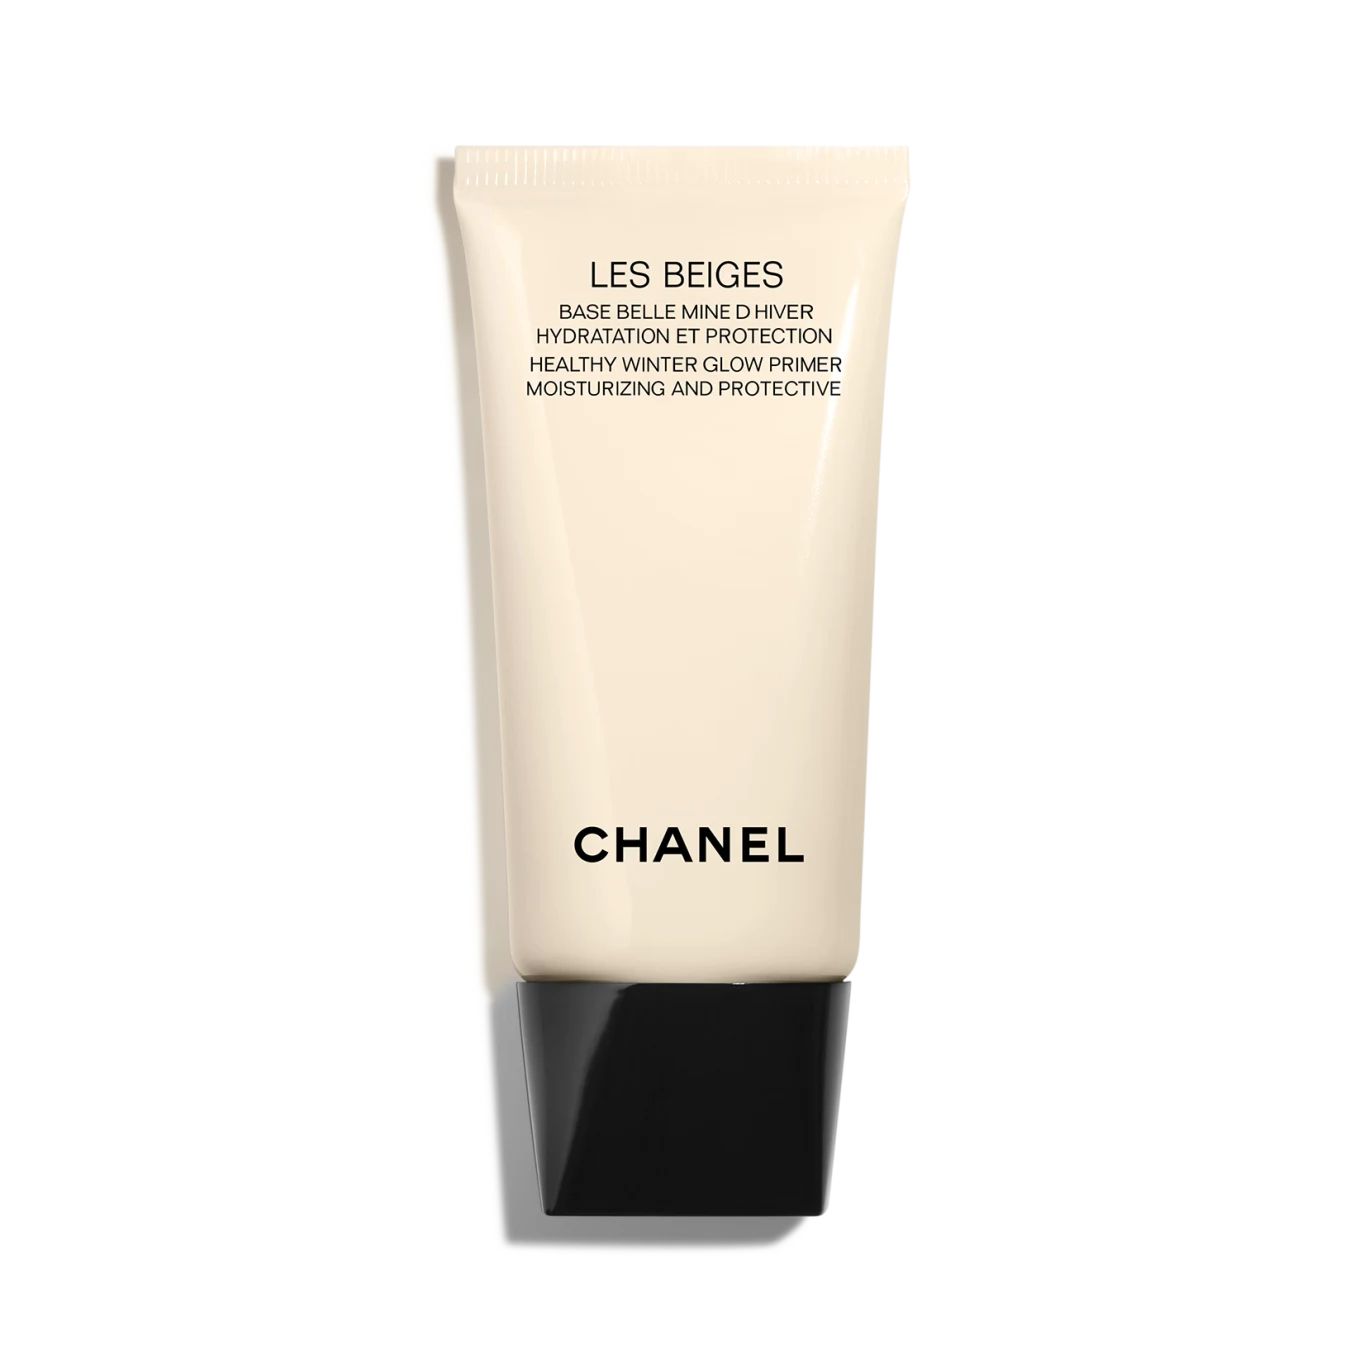 LES BEIGES

            
            Healthy Winter Glow Primer | Chanel, Inc. (US)